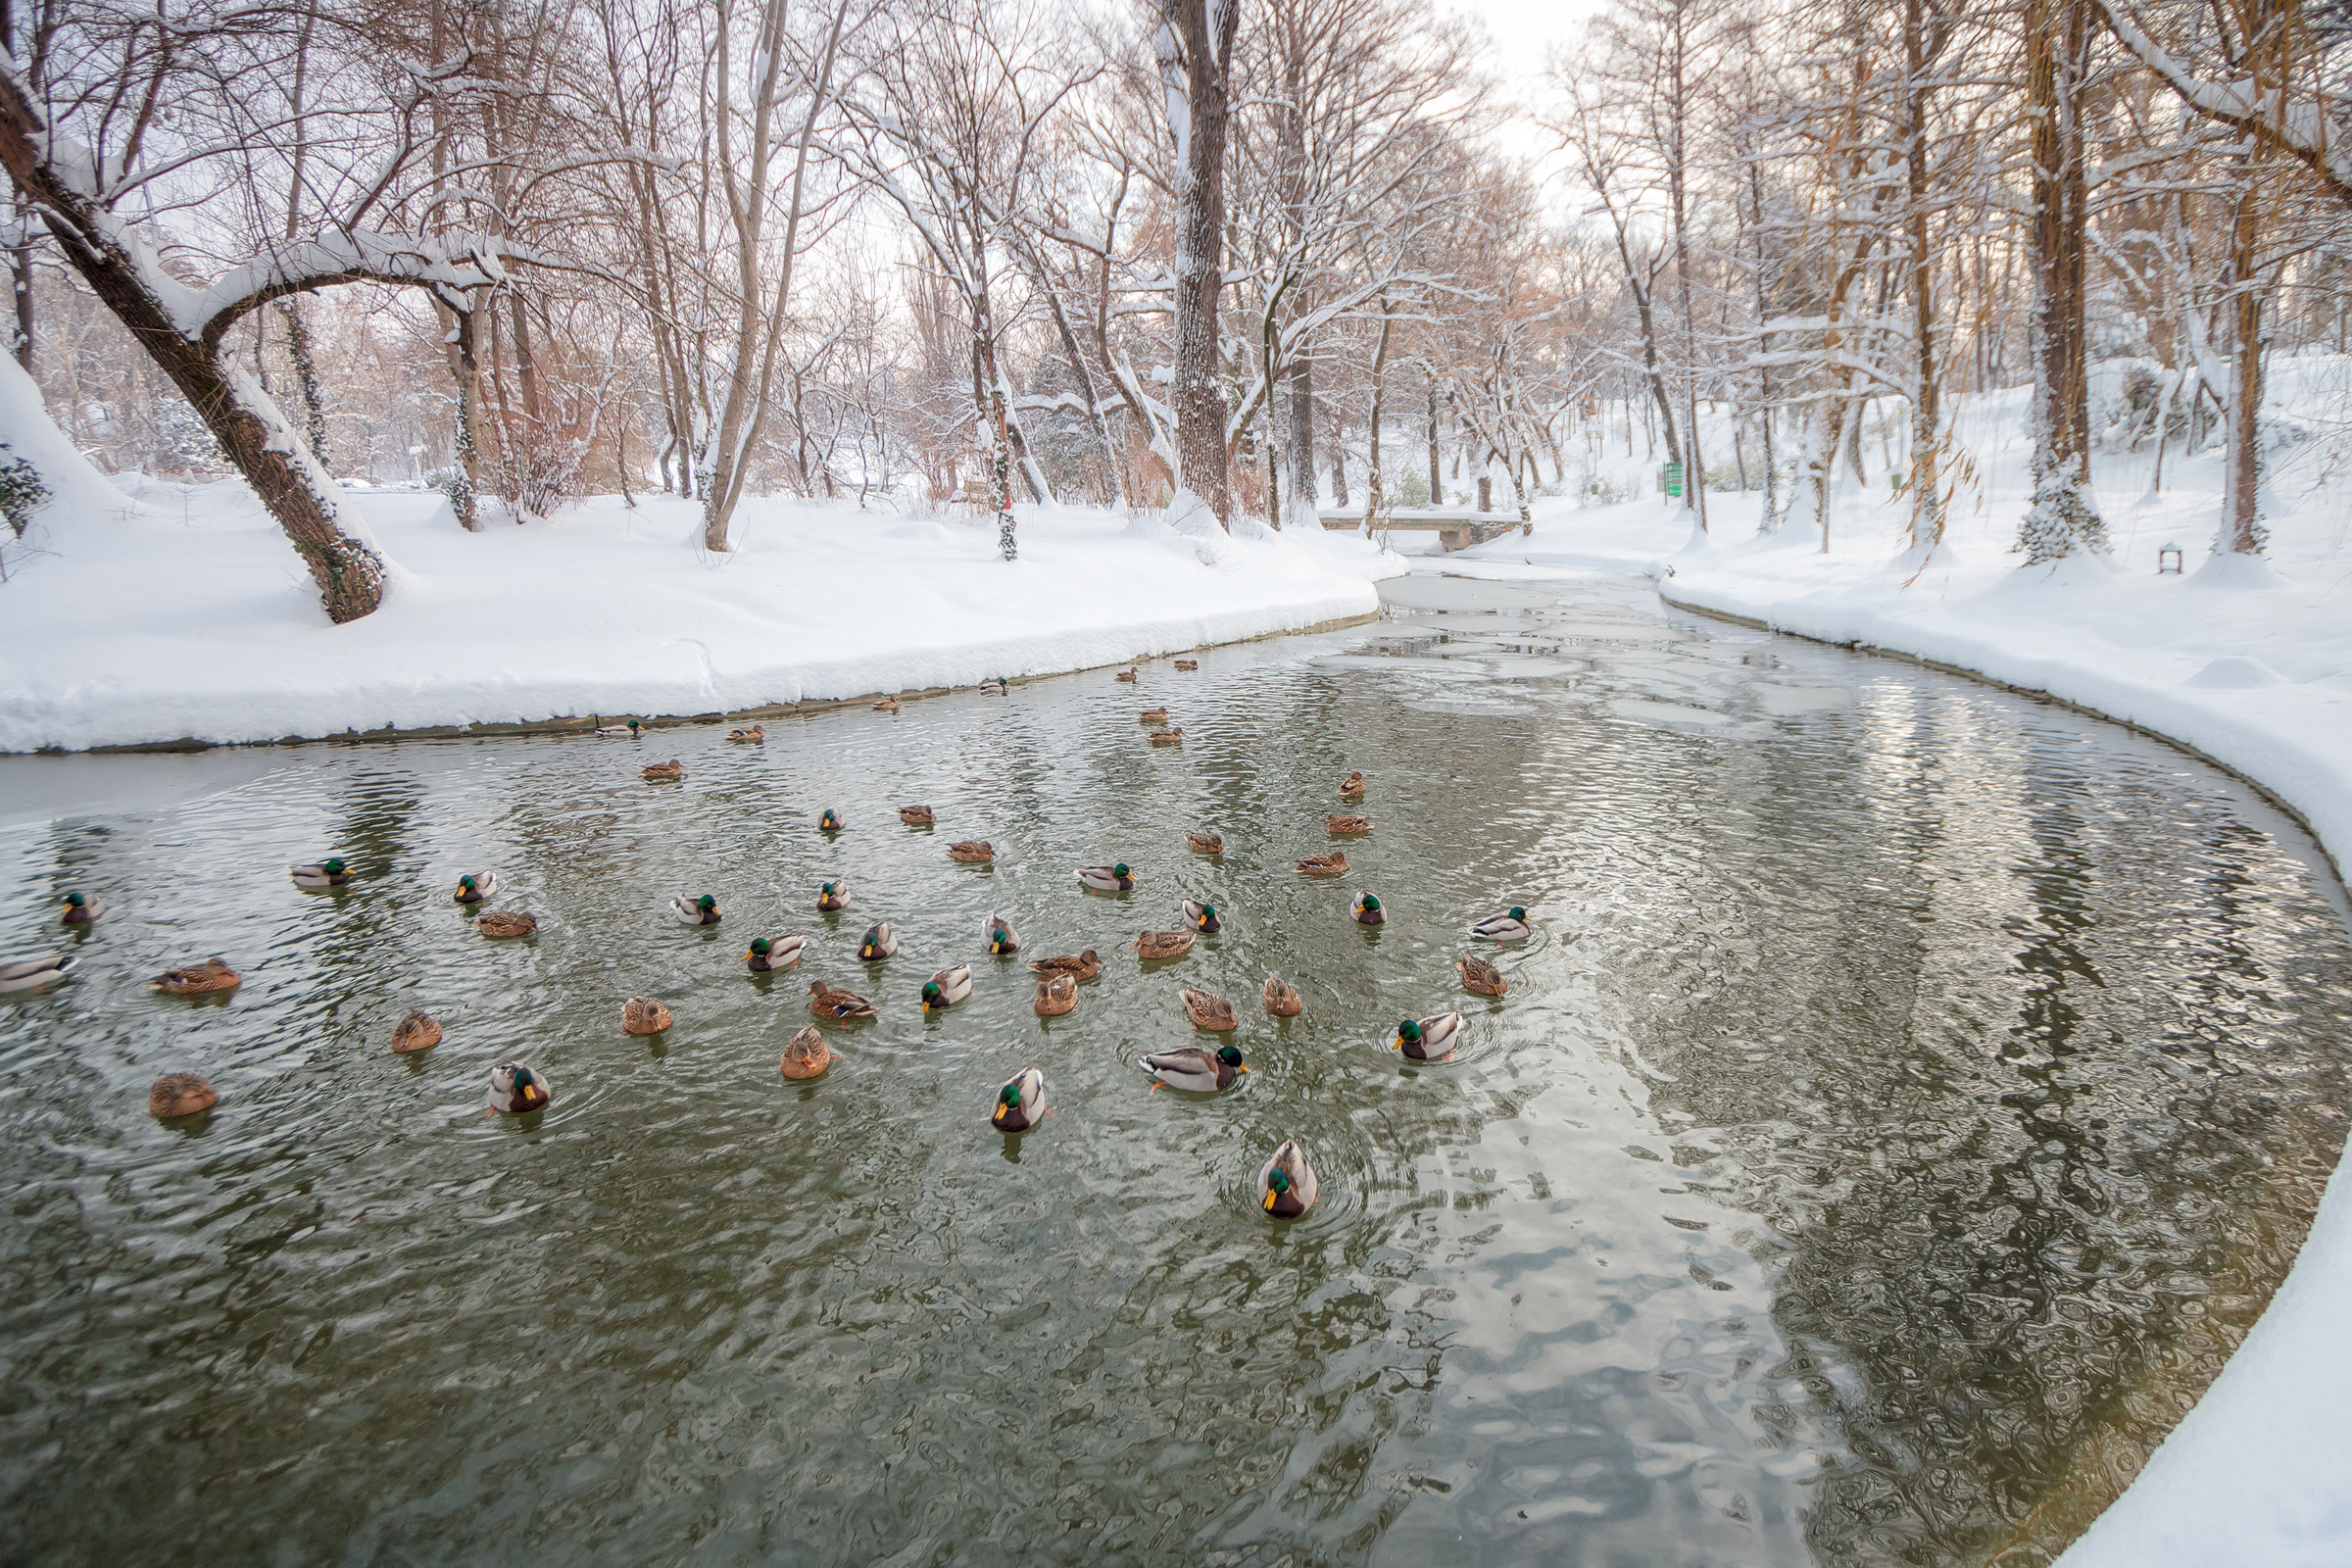 Wild ducks taking shelter during winter